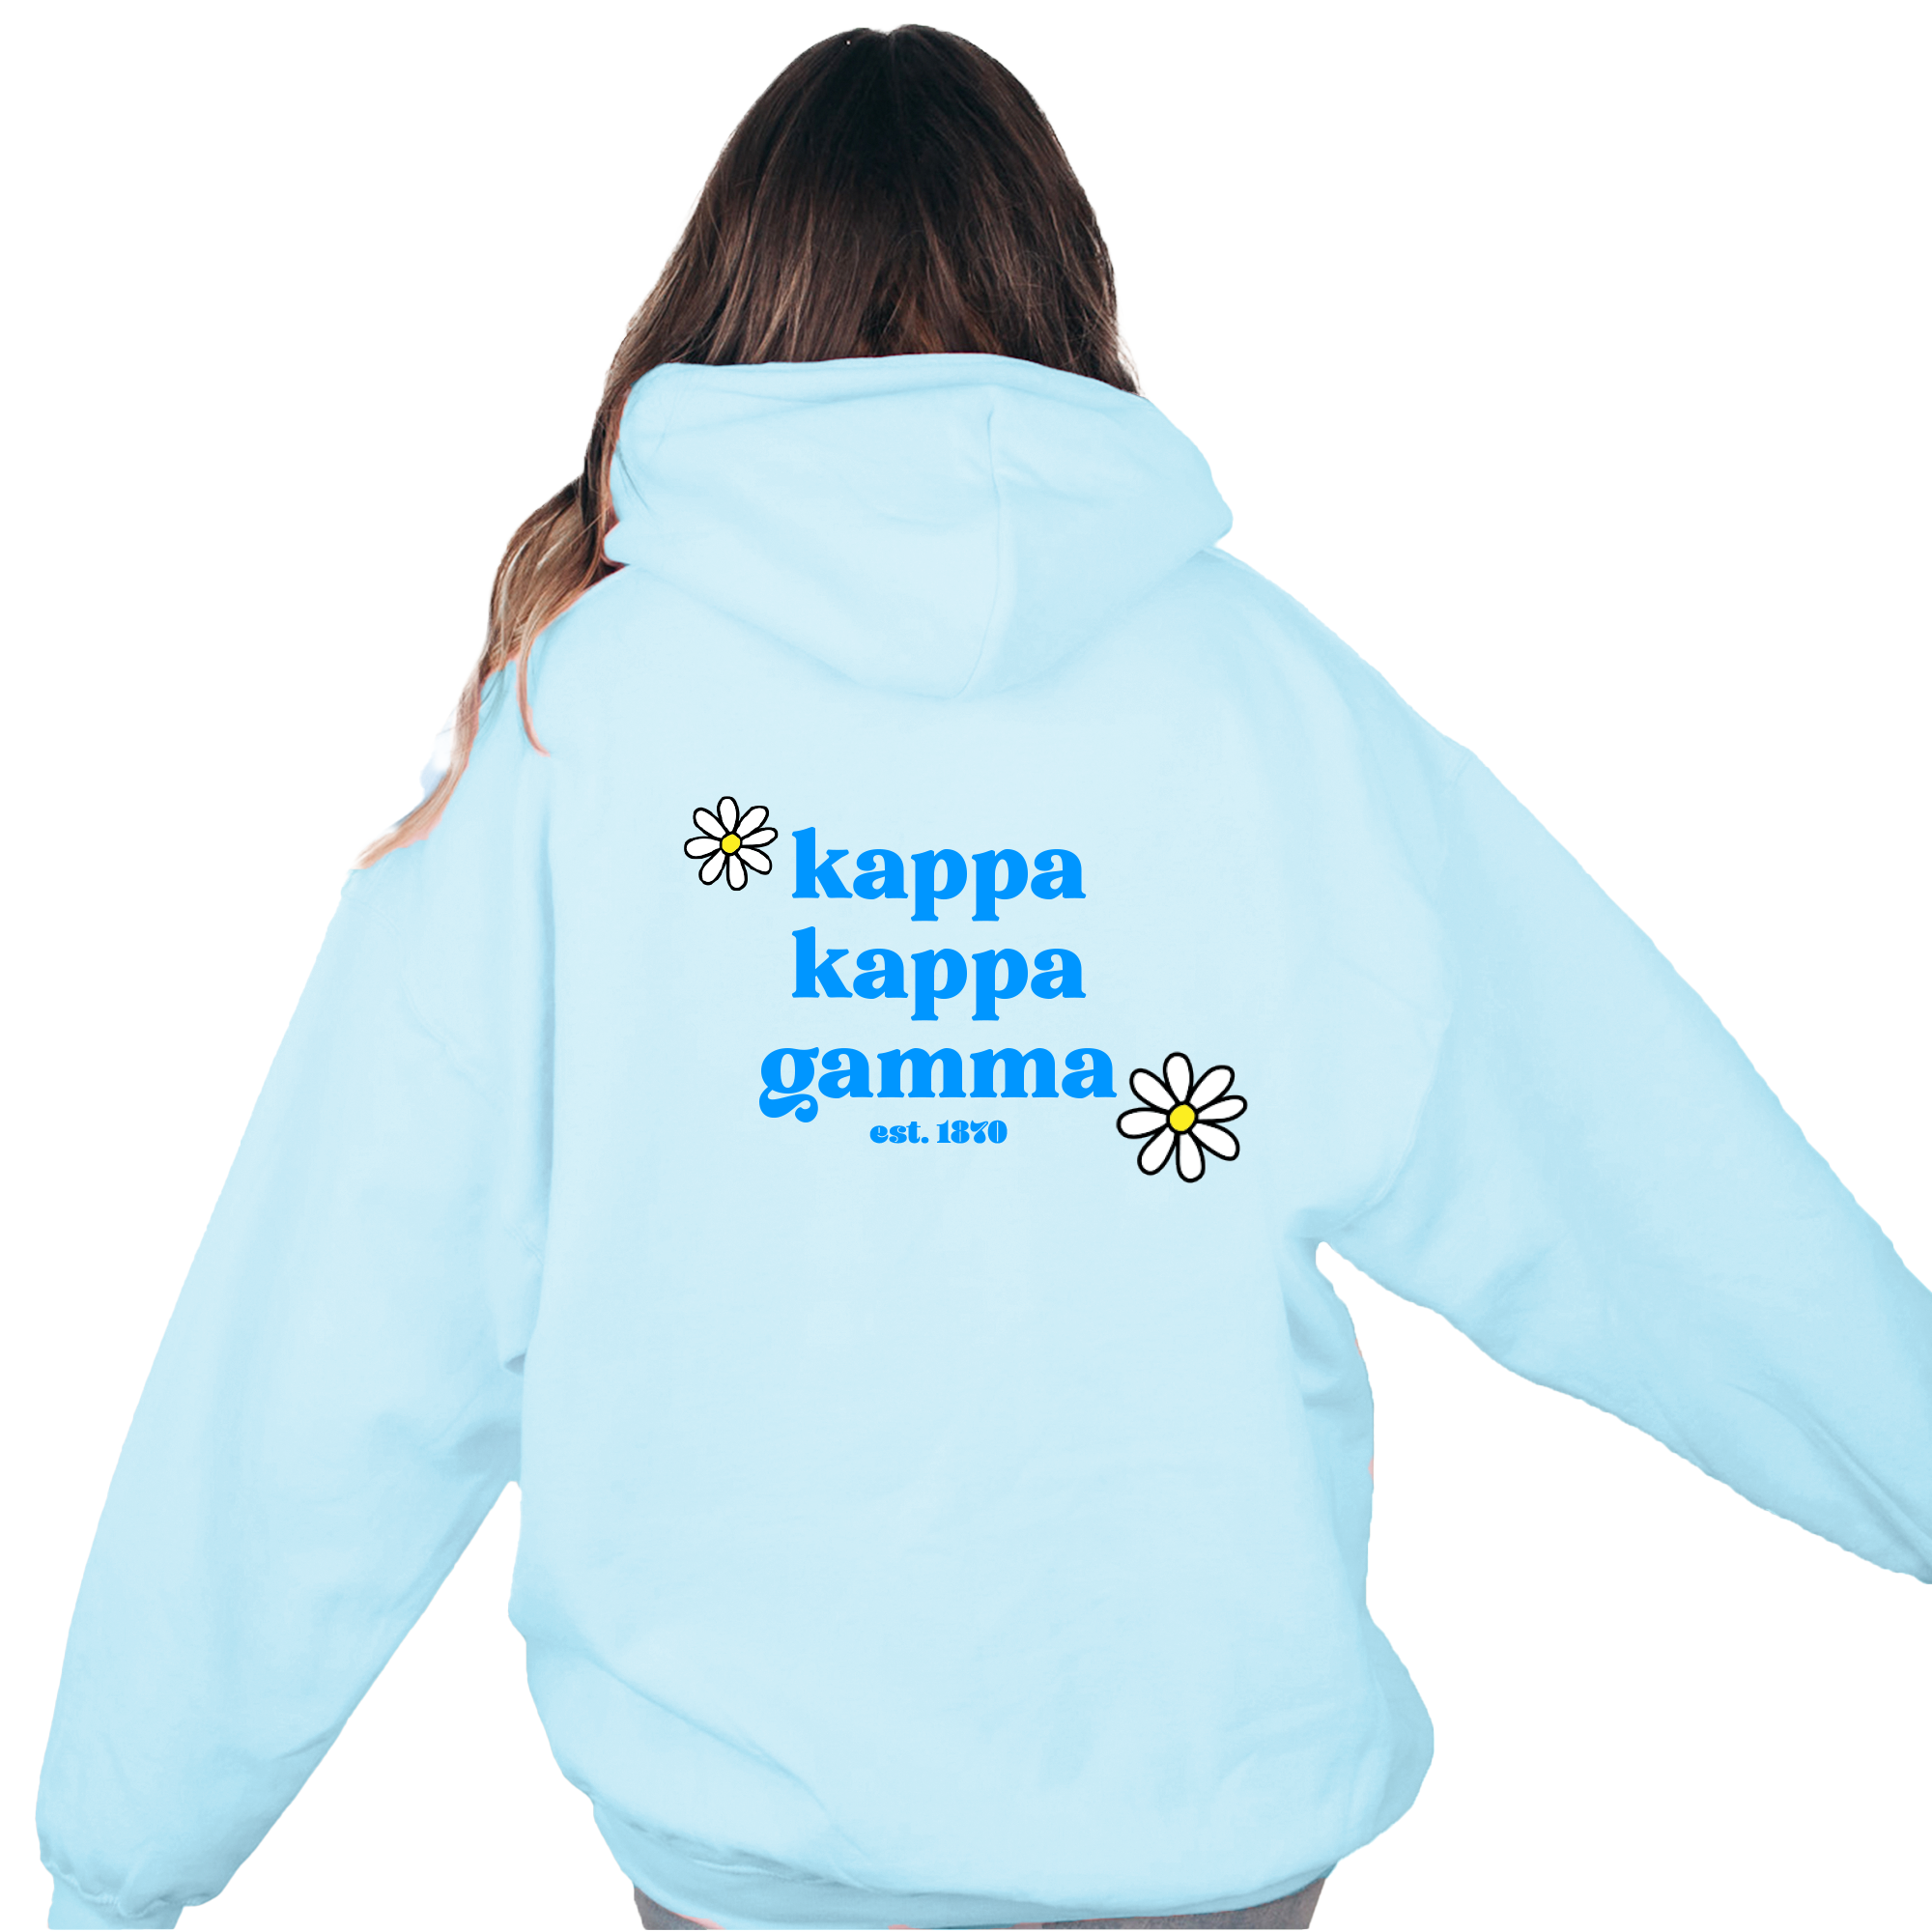 Kappa Kappa Gamma Hoodie - Blue Daisy Hoodie - Go Greek Chic